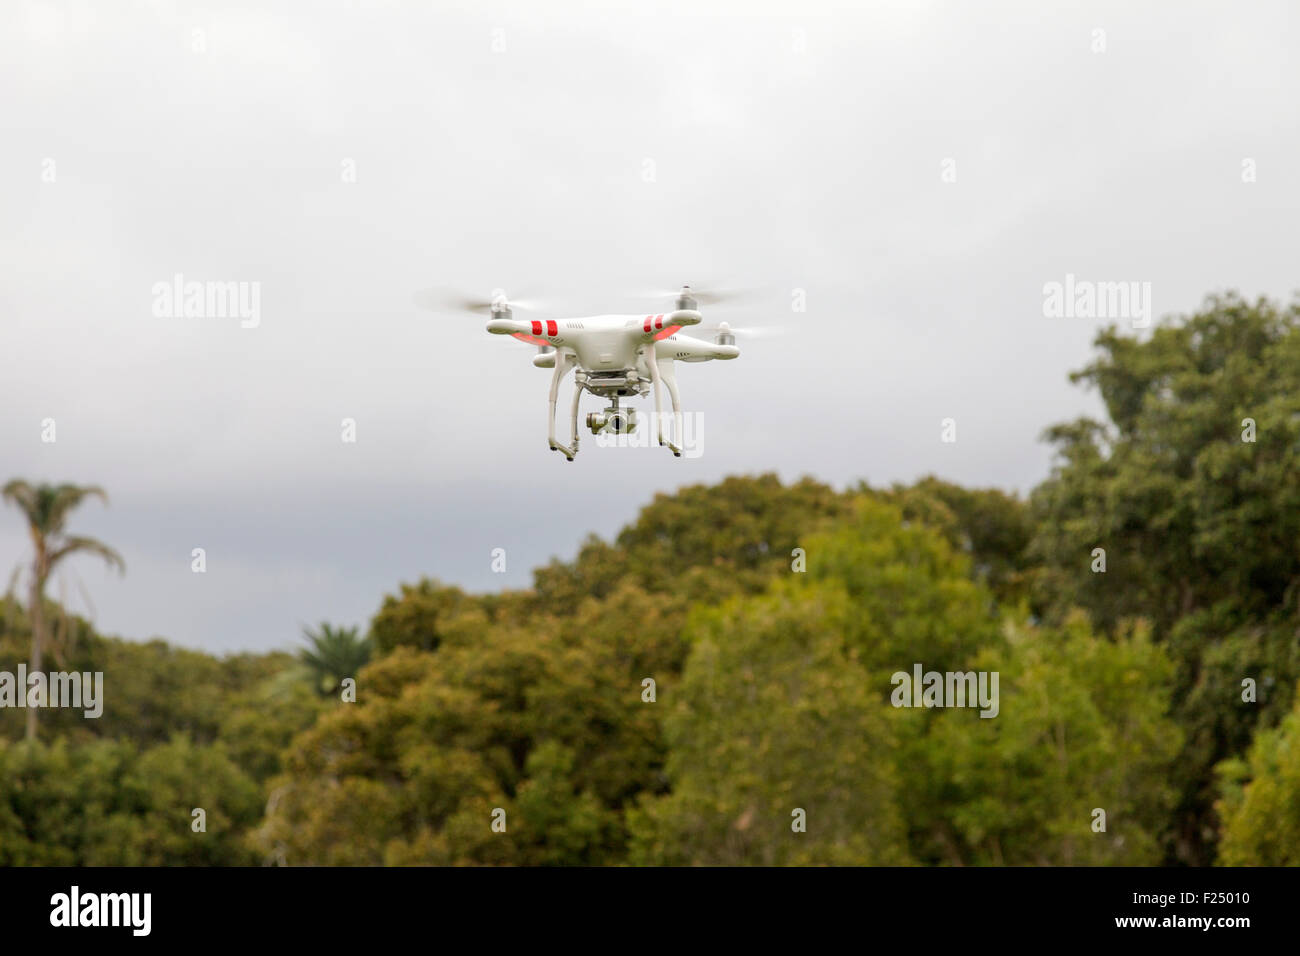 Un vuelo de drone con un gimbal y cámara conectada. Foto de stock